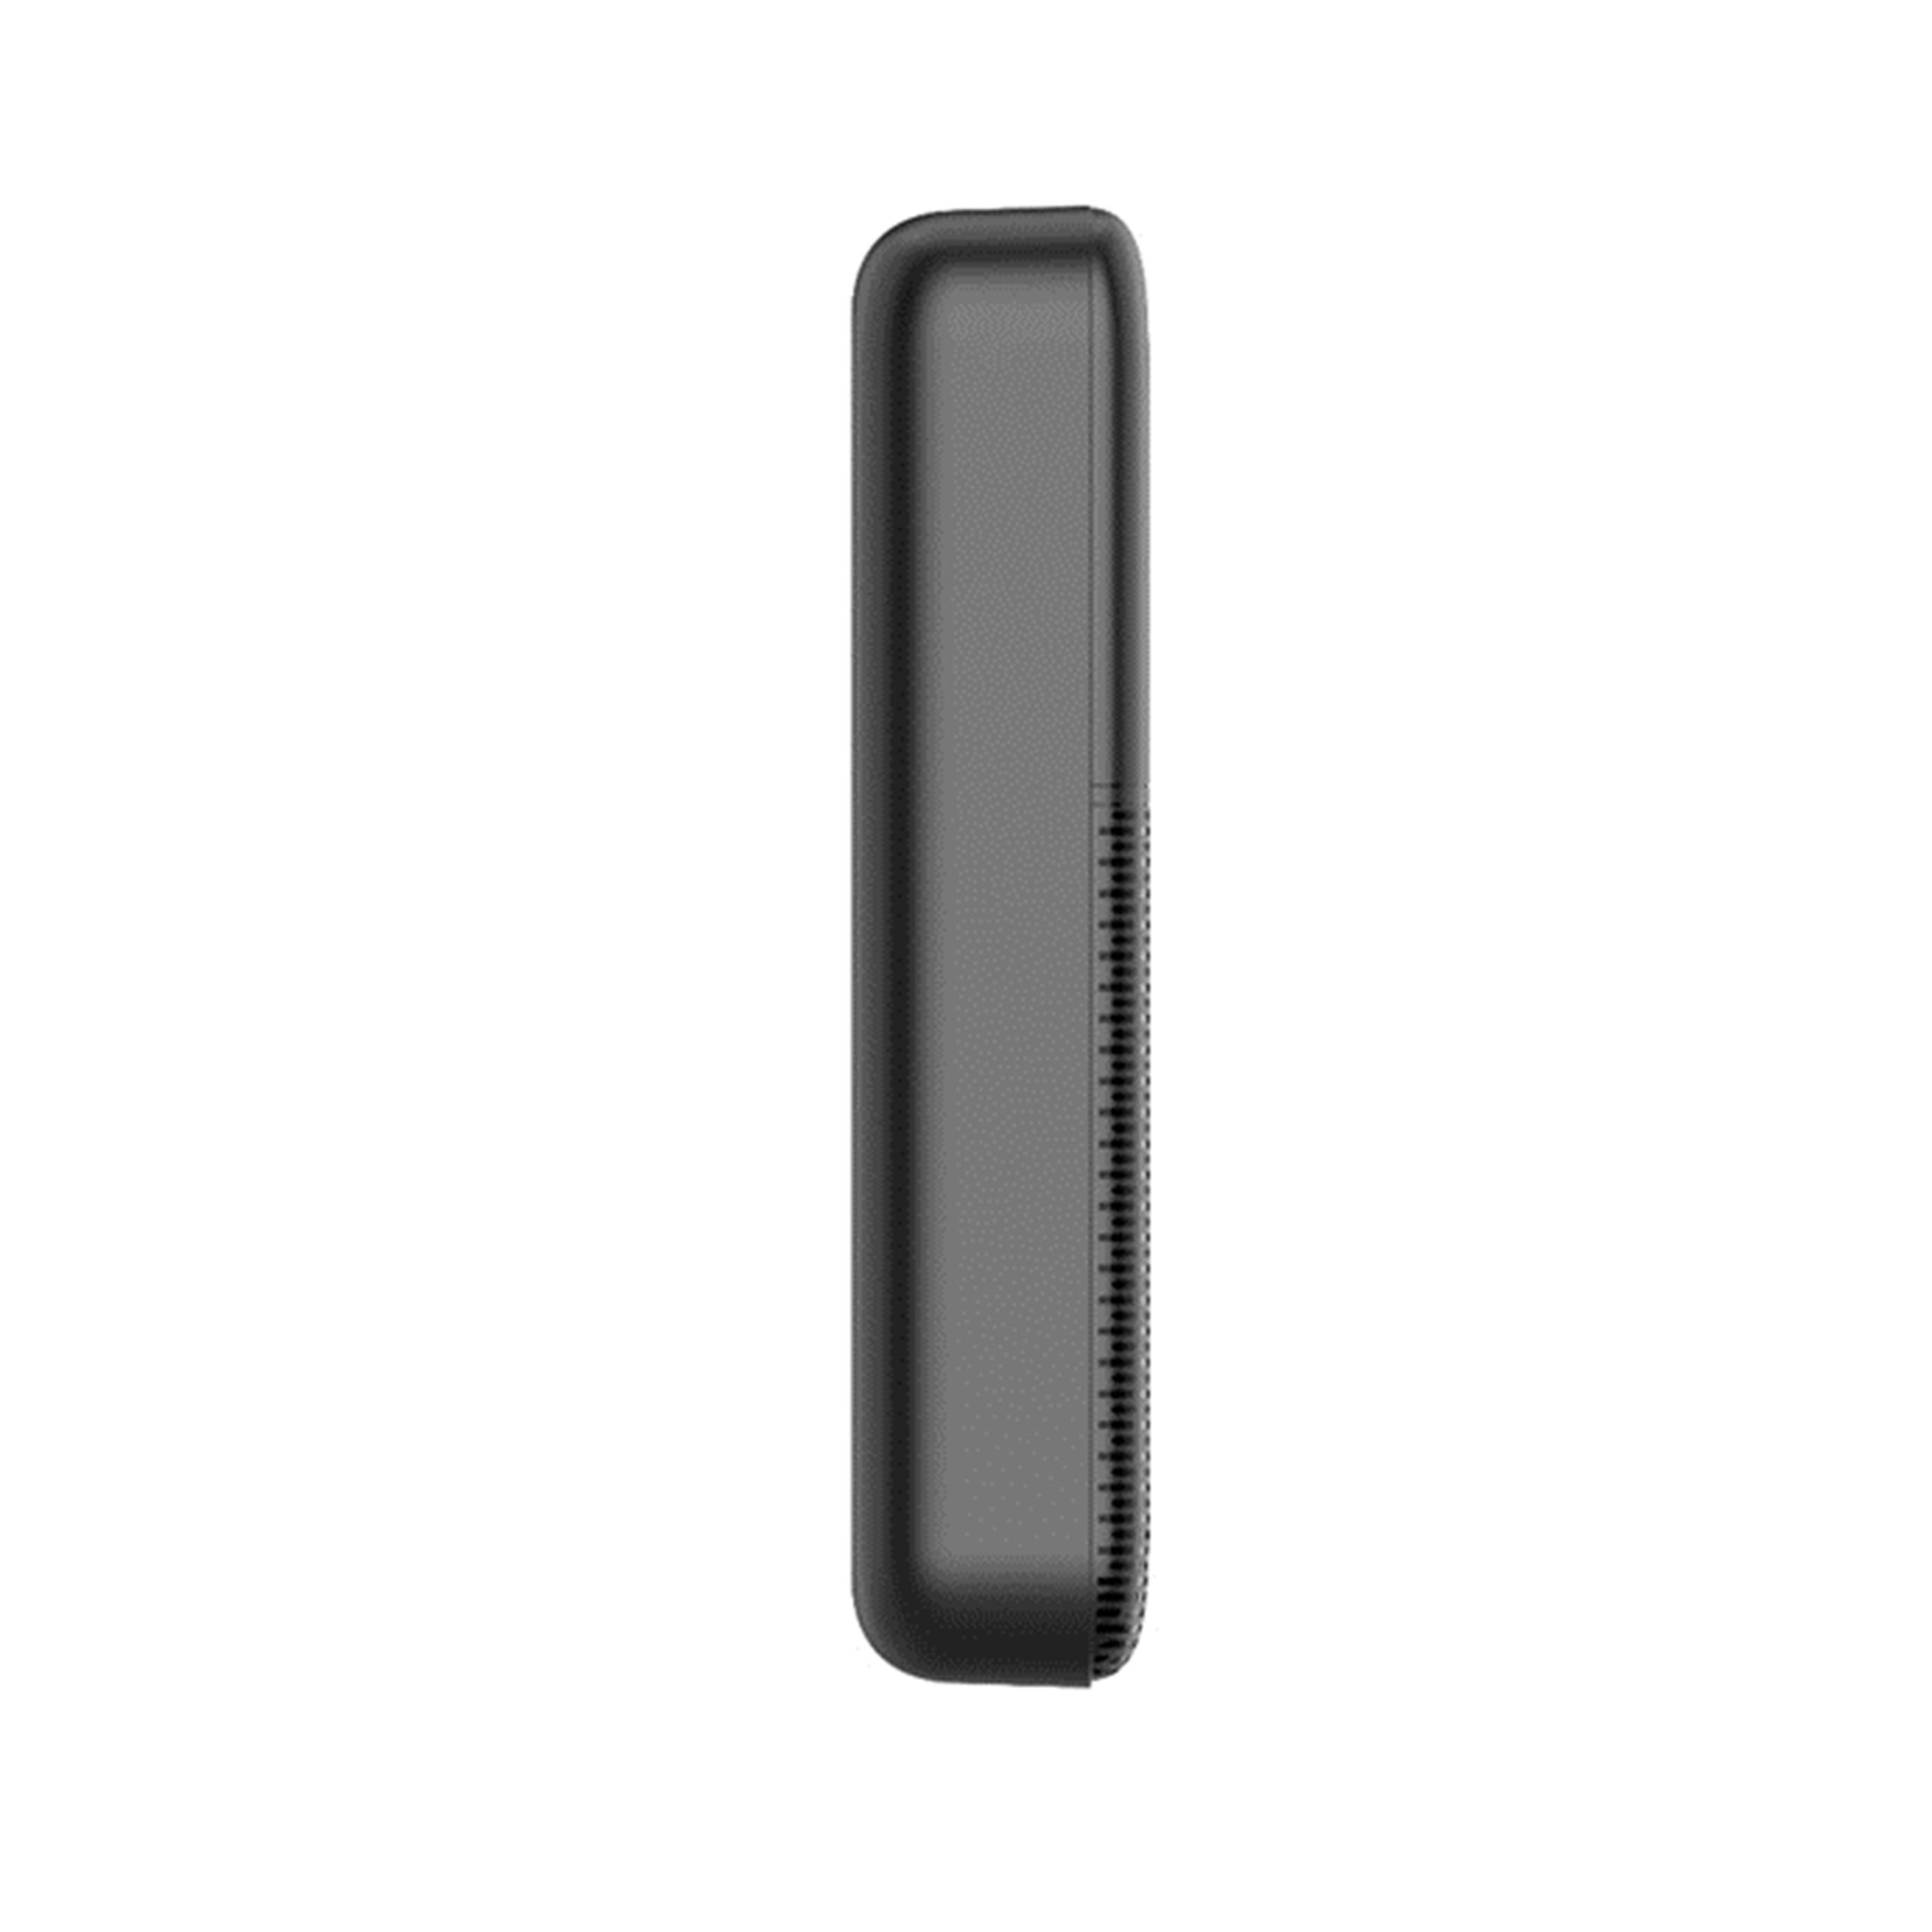 NEW – SAPILDO SAL-PWB206 Black Colour with 1 Year Warranty